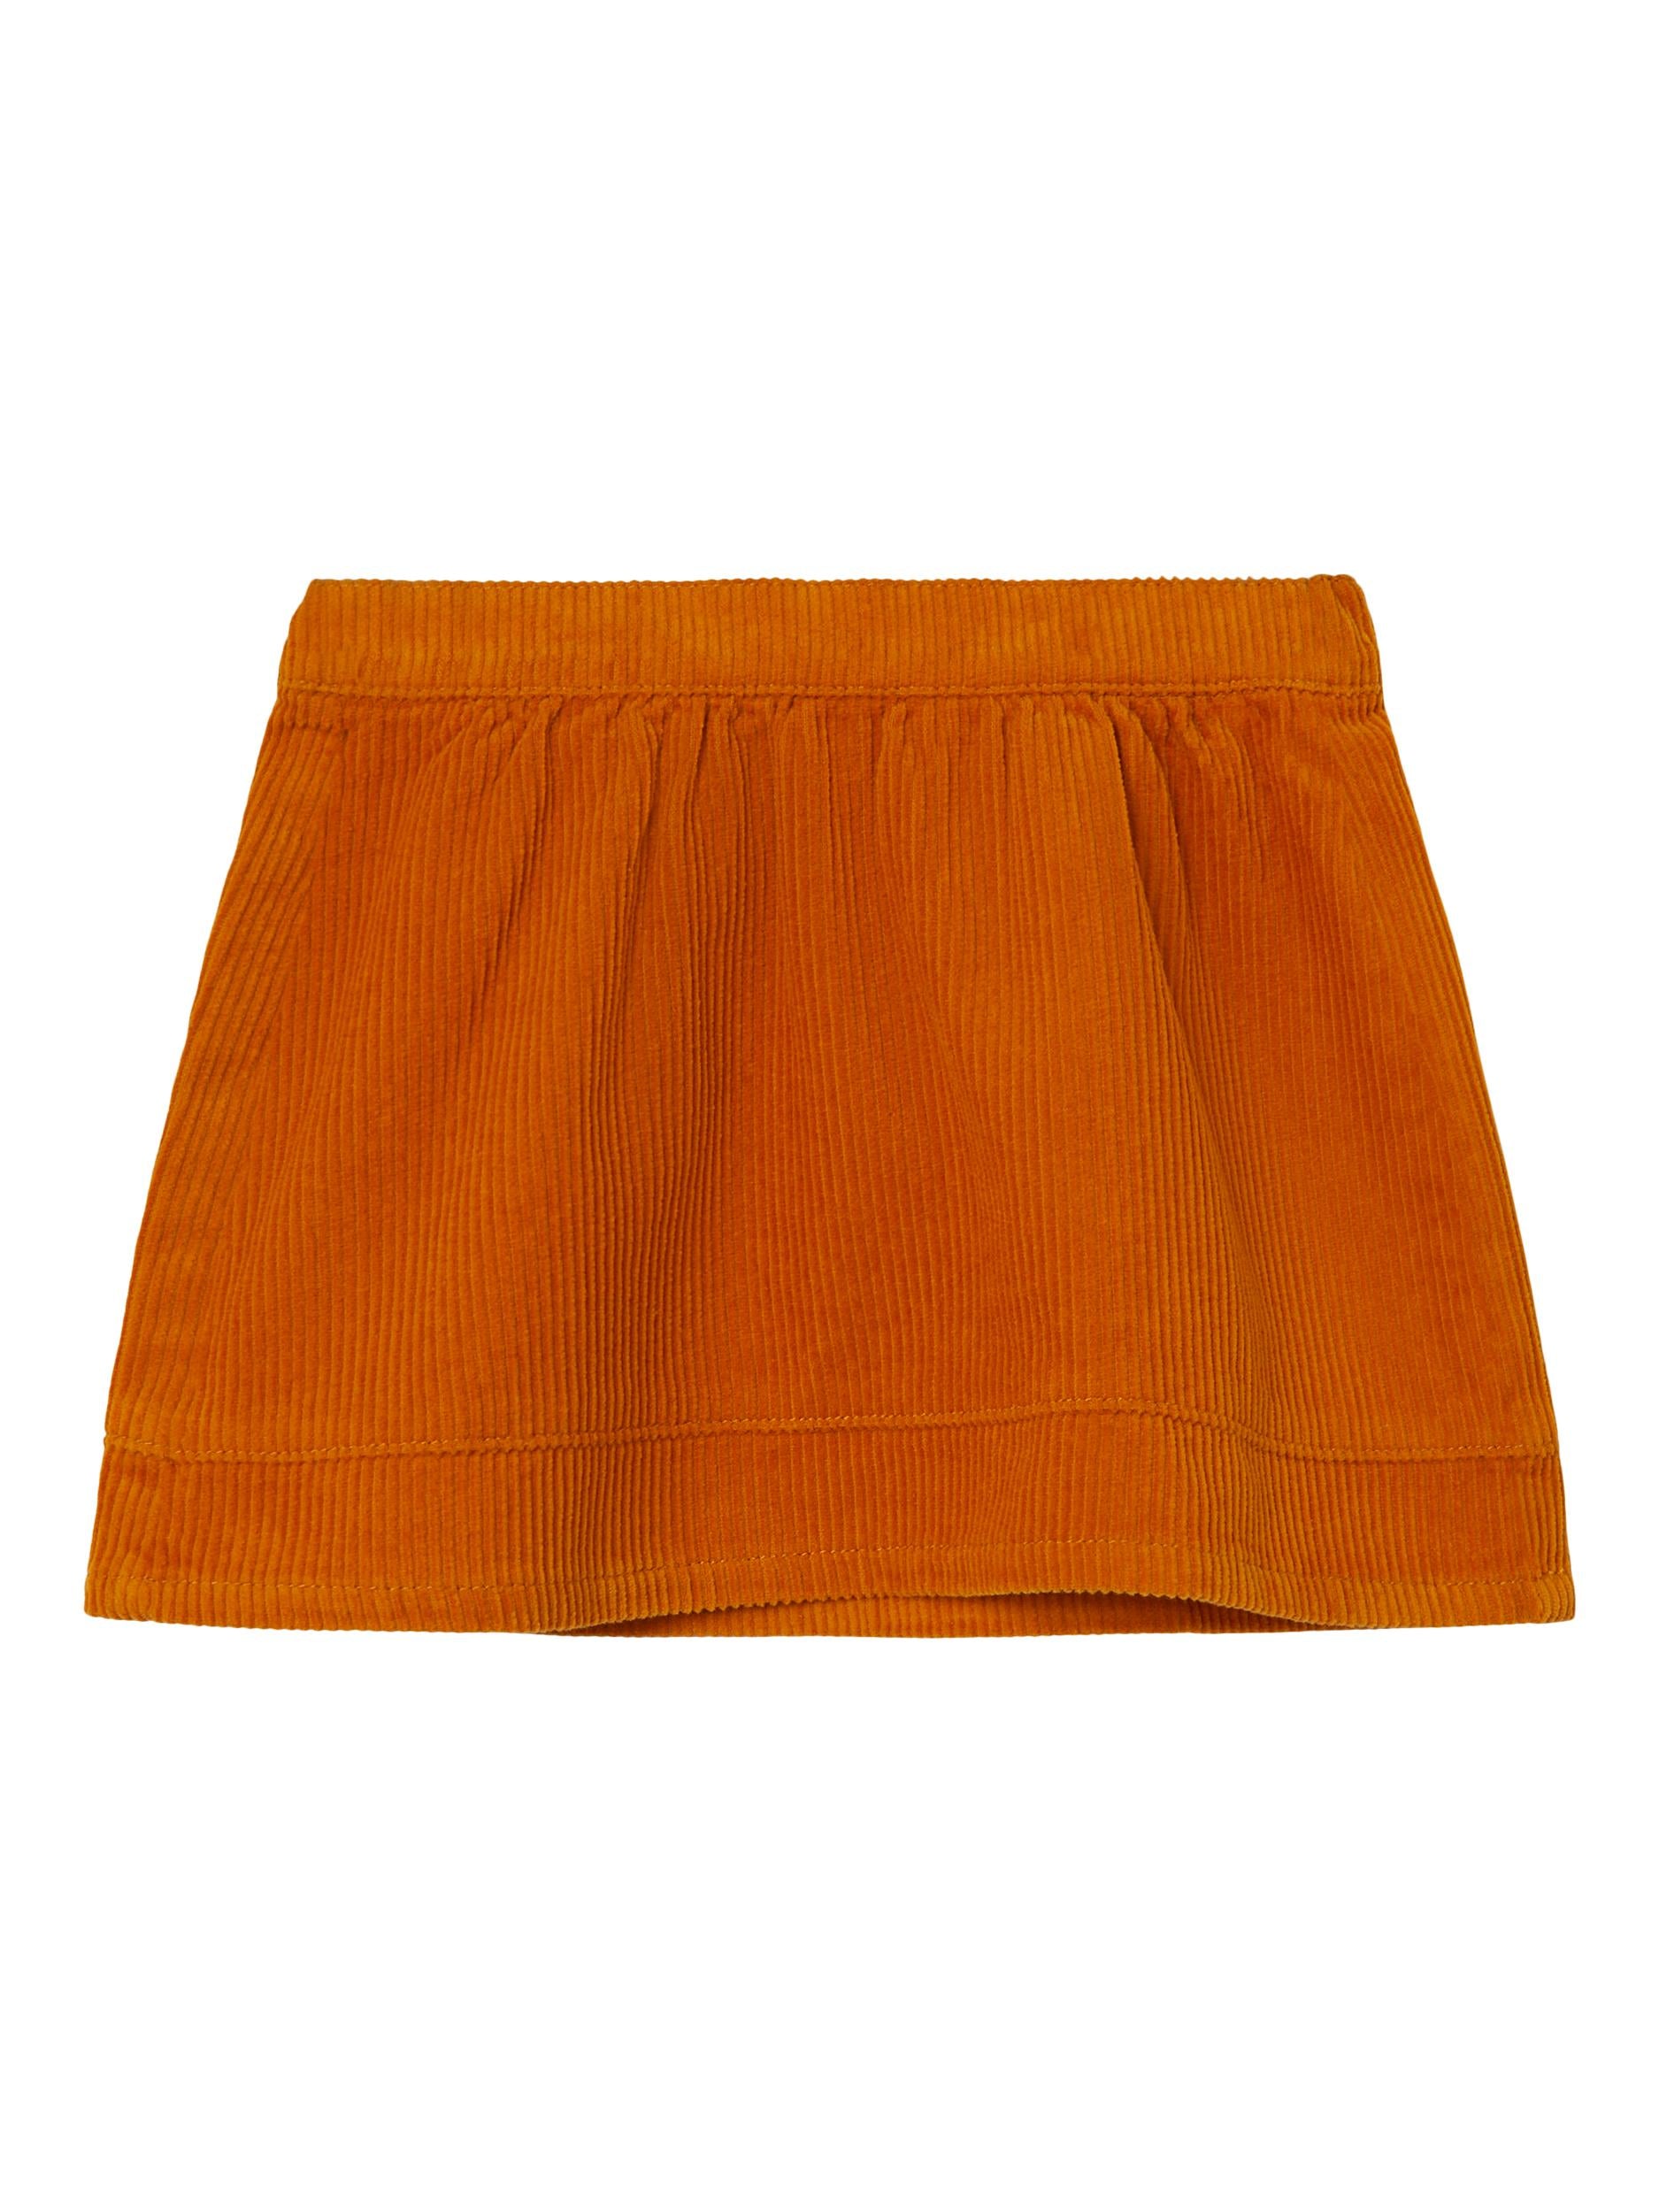 Mia Loose Cord Short Skirt - Inca Gold